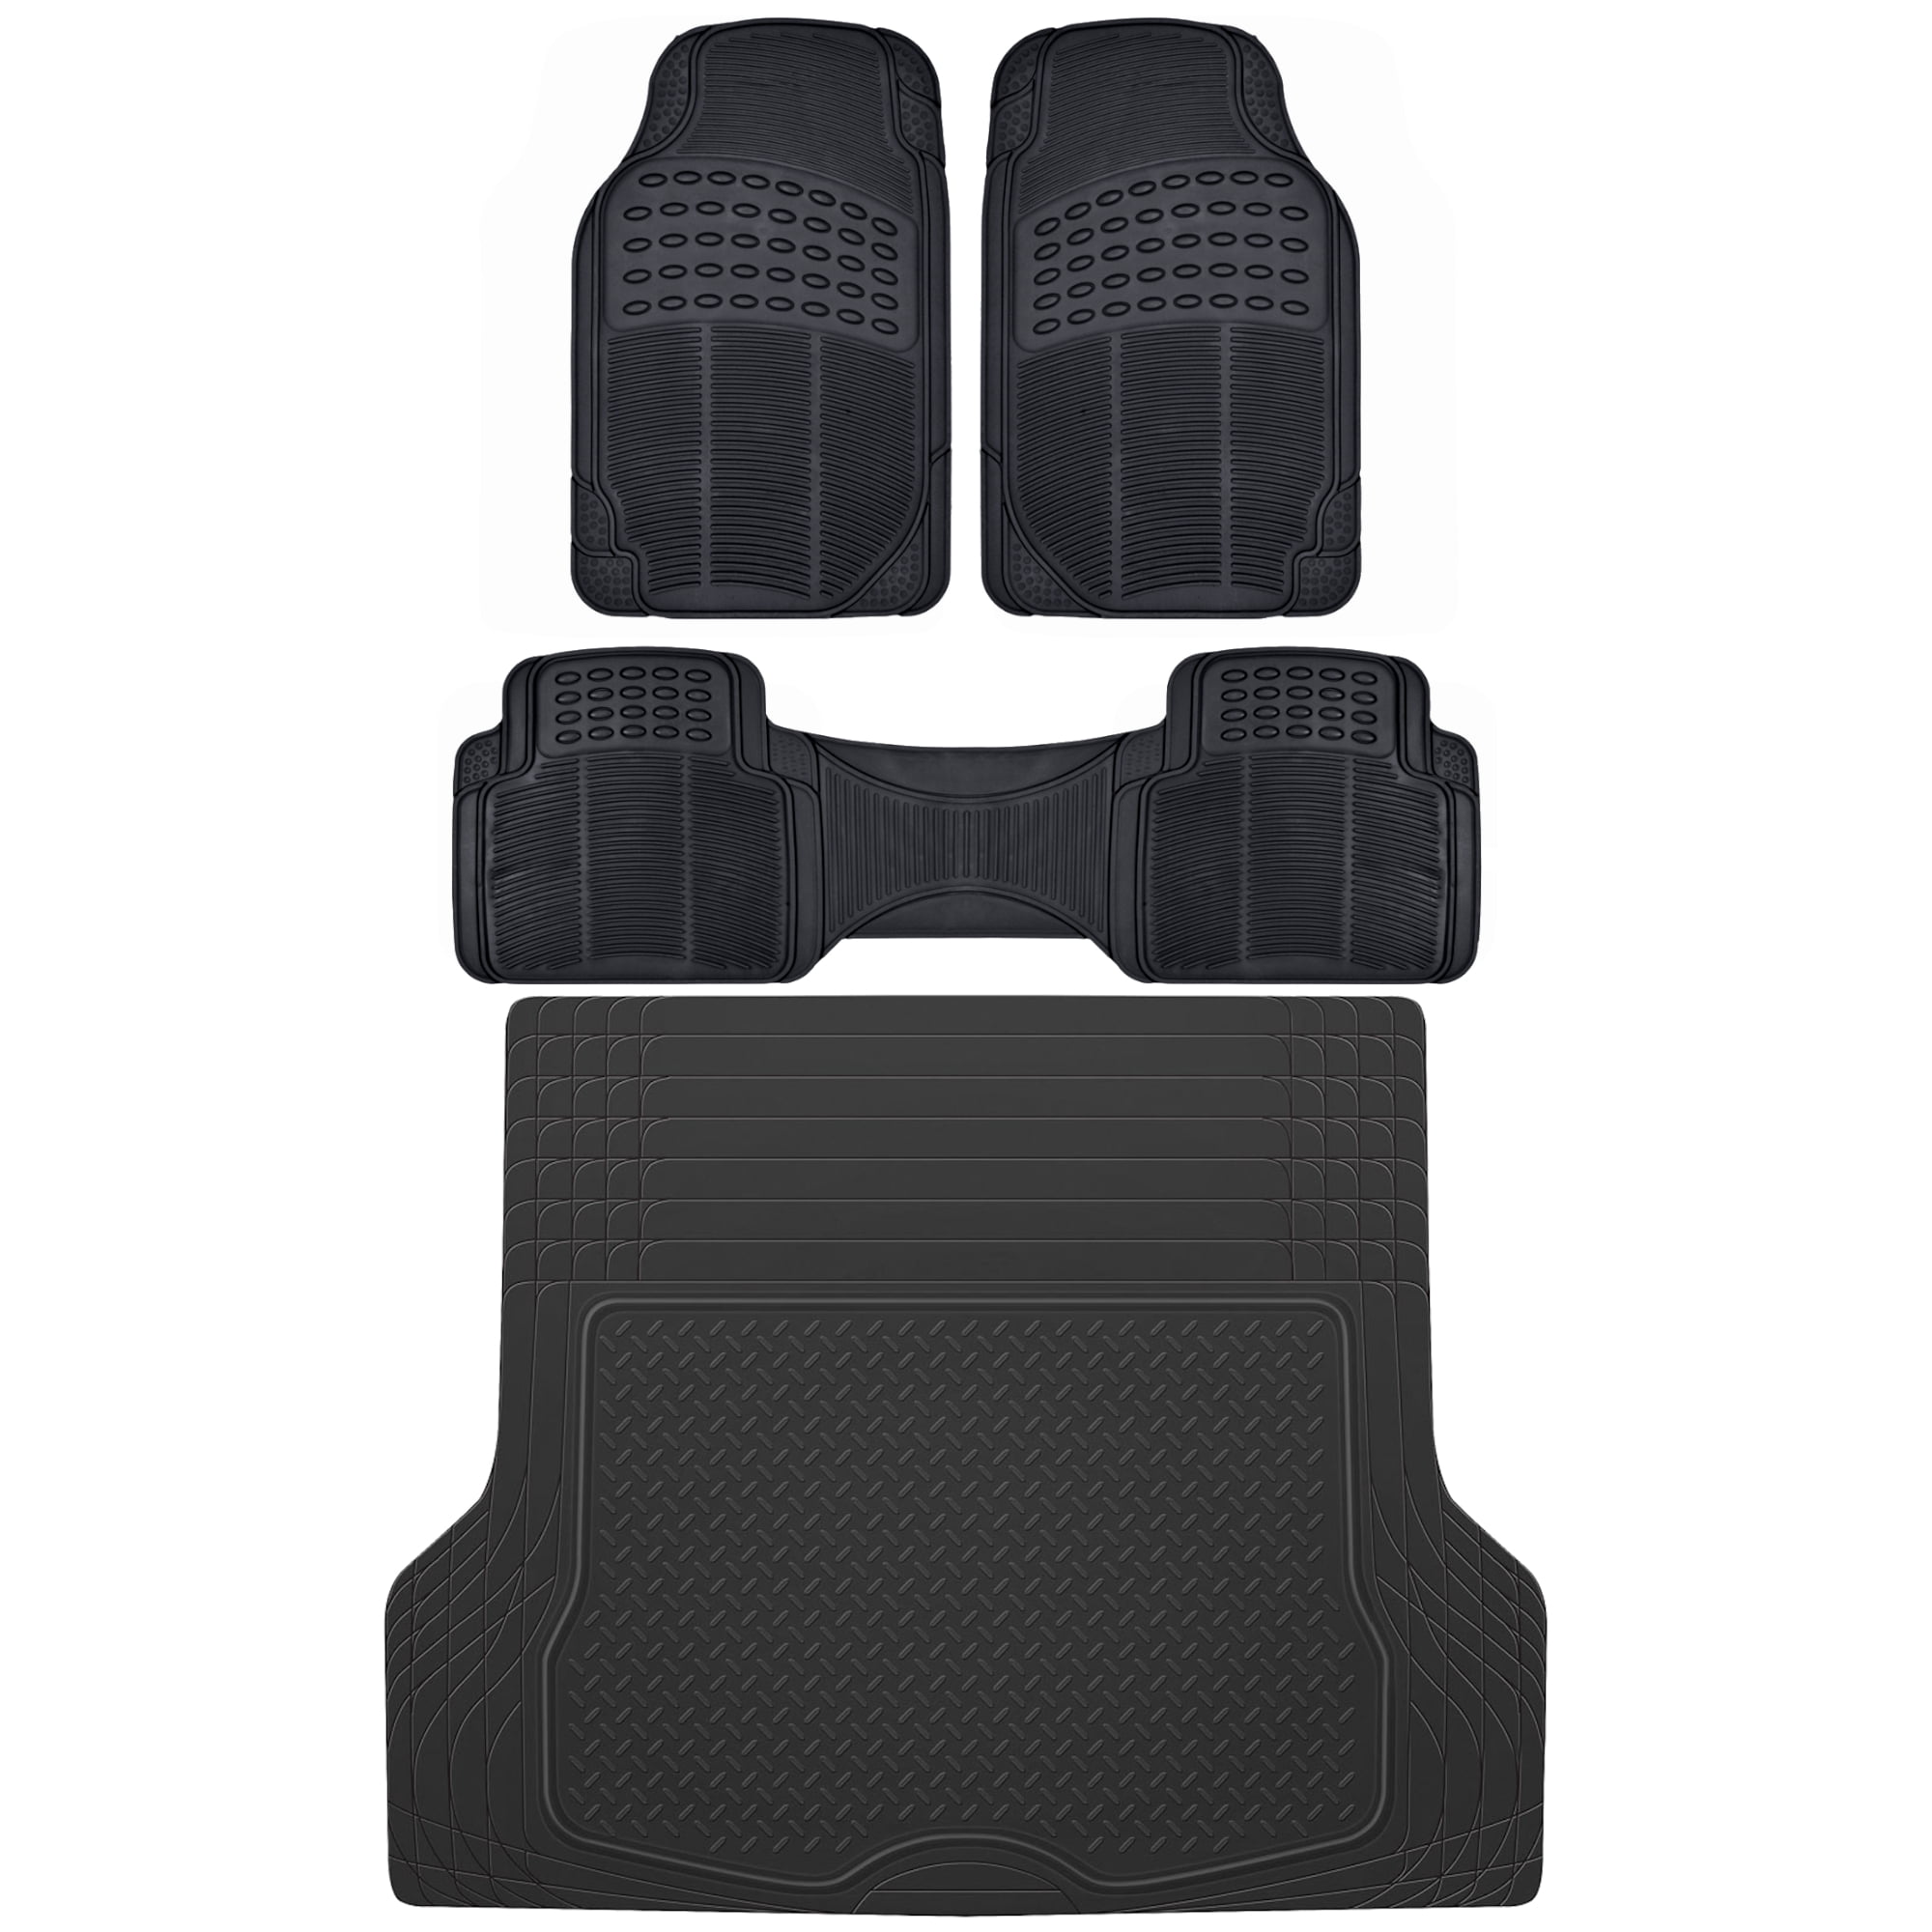 Ultra-Duty Rubber Auto Car Floor Mat Motor Trend All Season Protection Black HD 